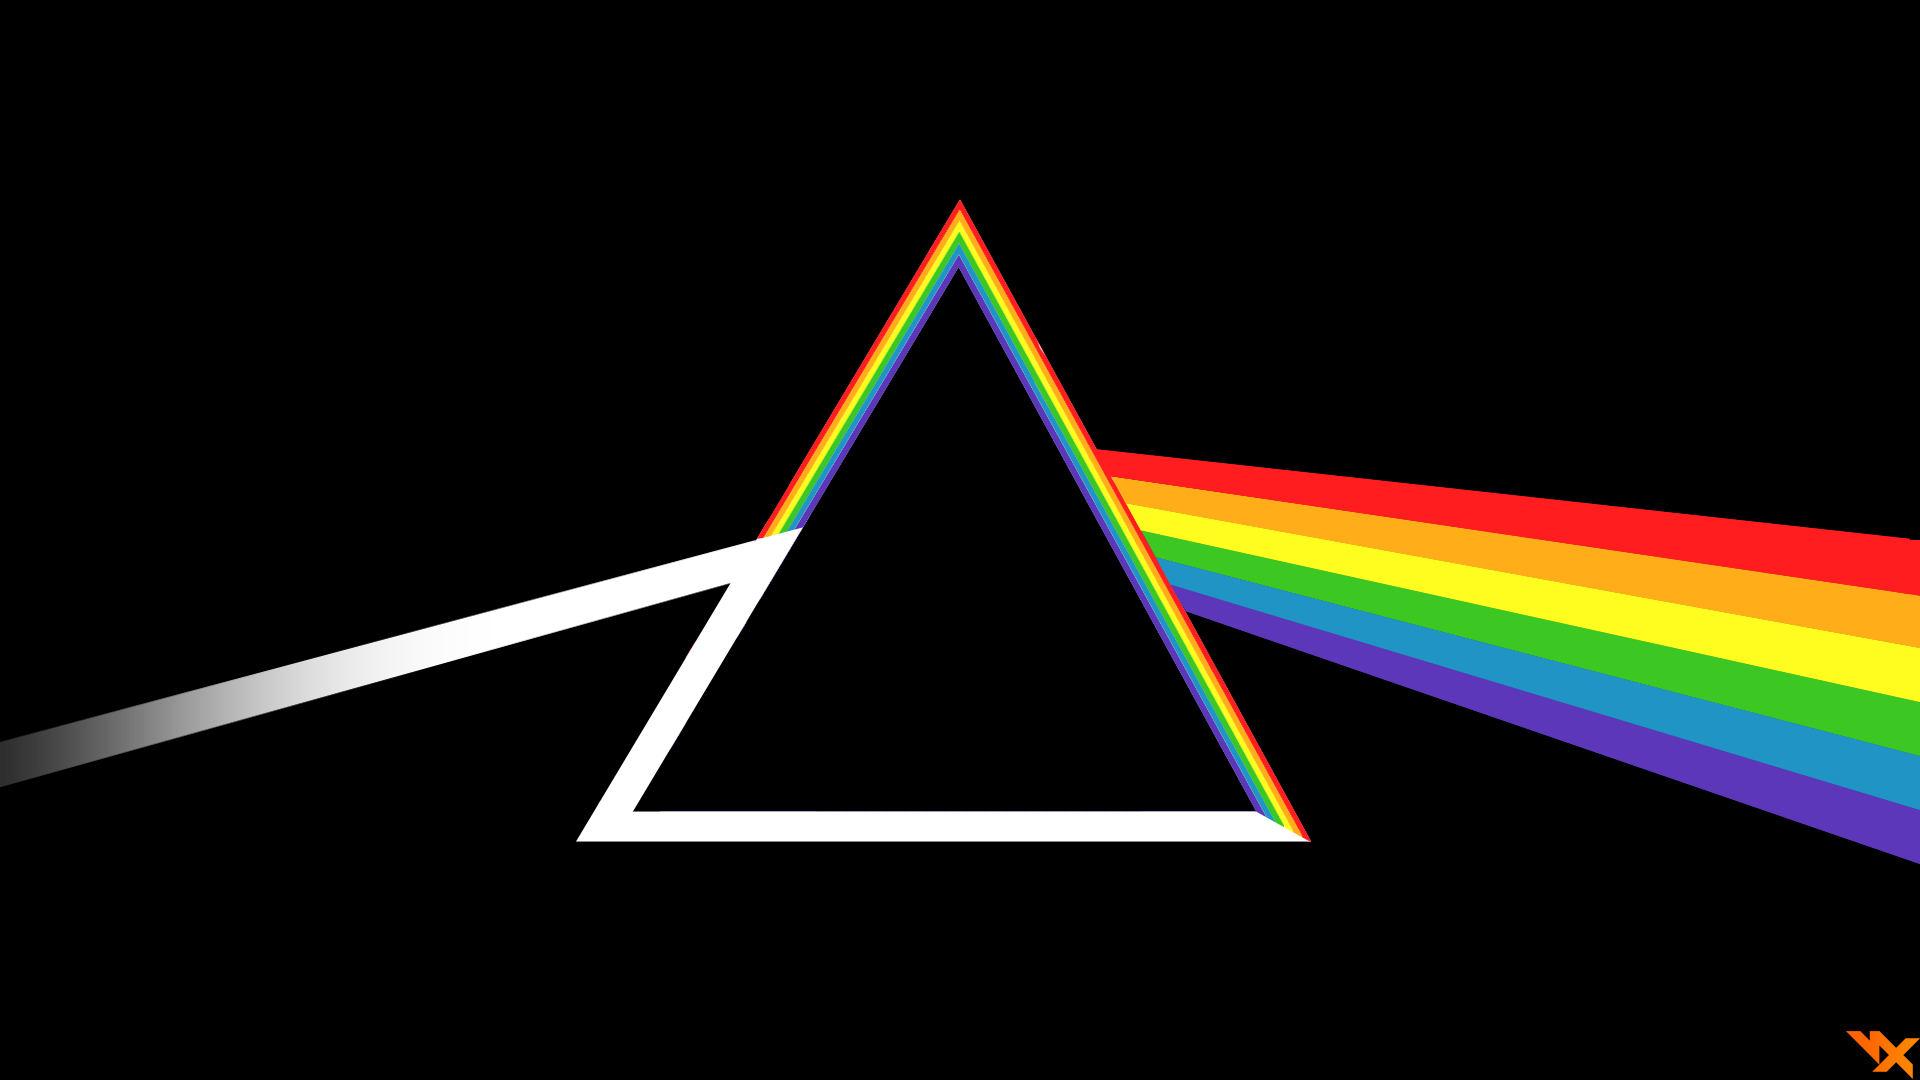 I Made A Simplistic Pink Floyd Pride Flag Wallpaper Lgbt